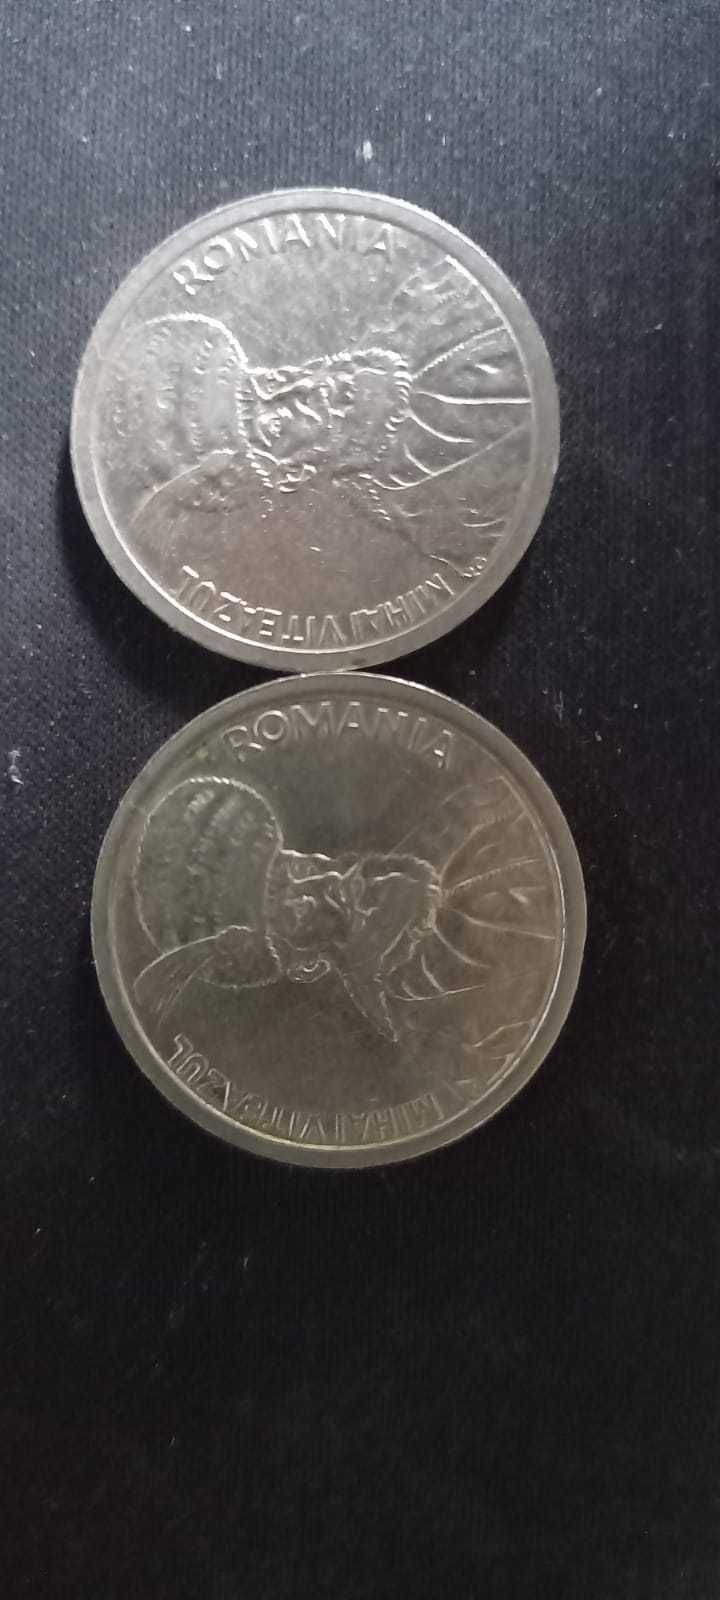 Monede anul 1992 si 1994 Mihai Viteazl